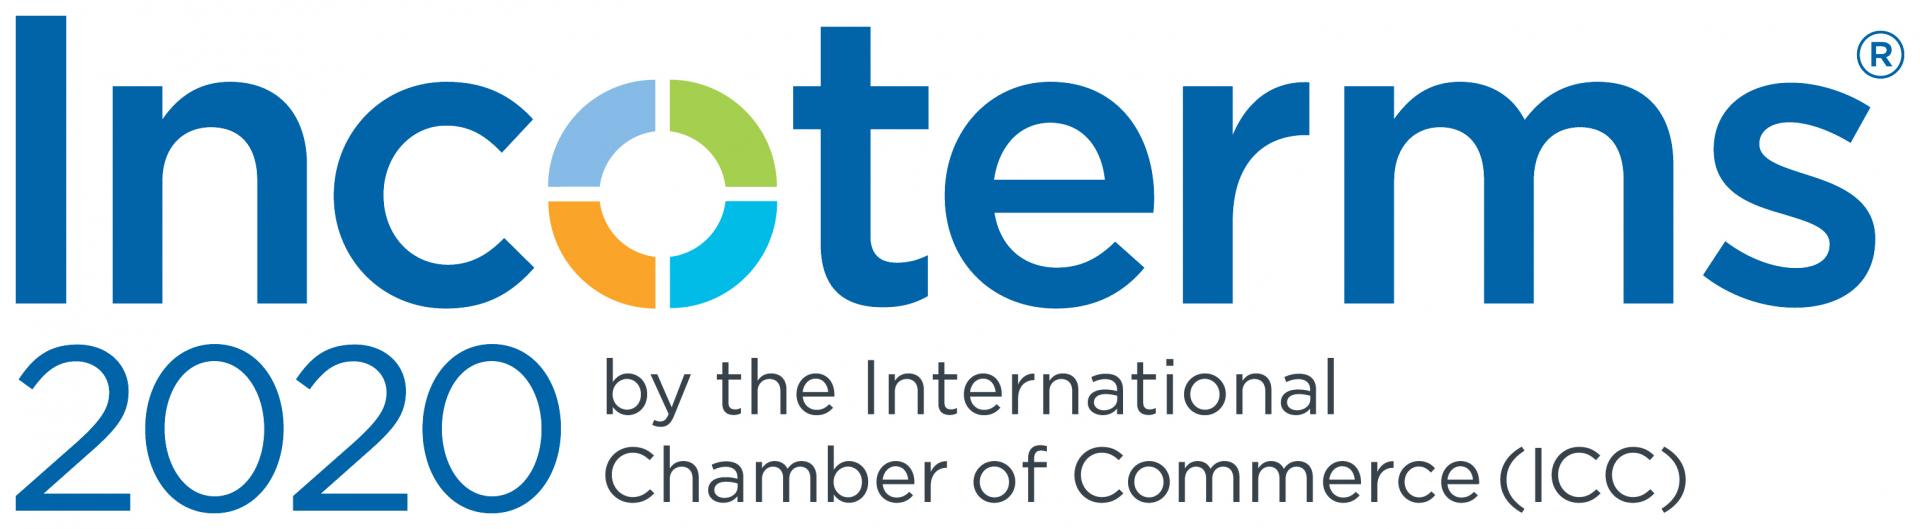 Icc incoterms 2020 logo 